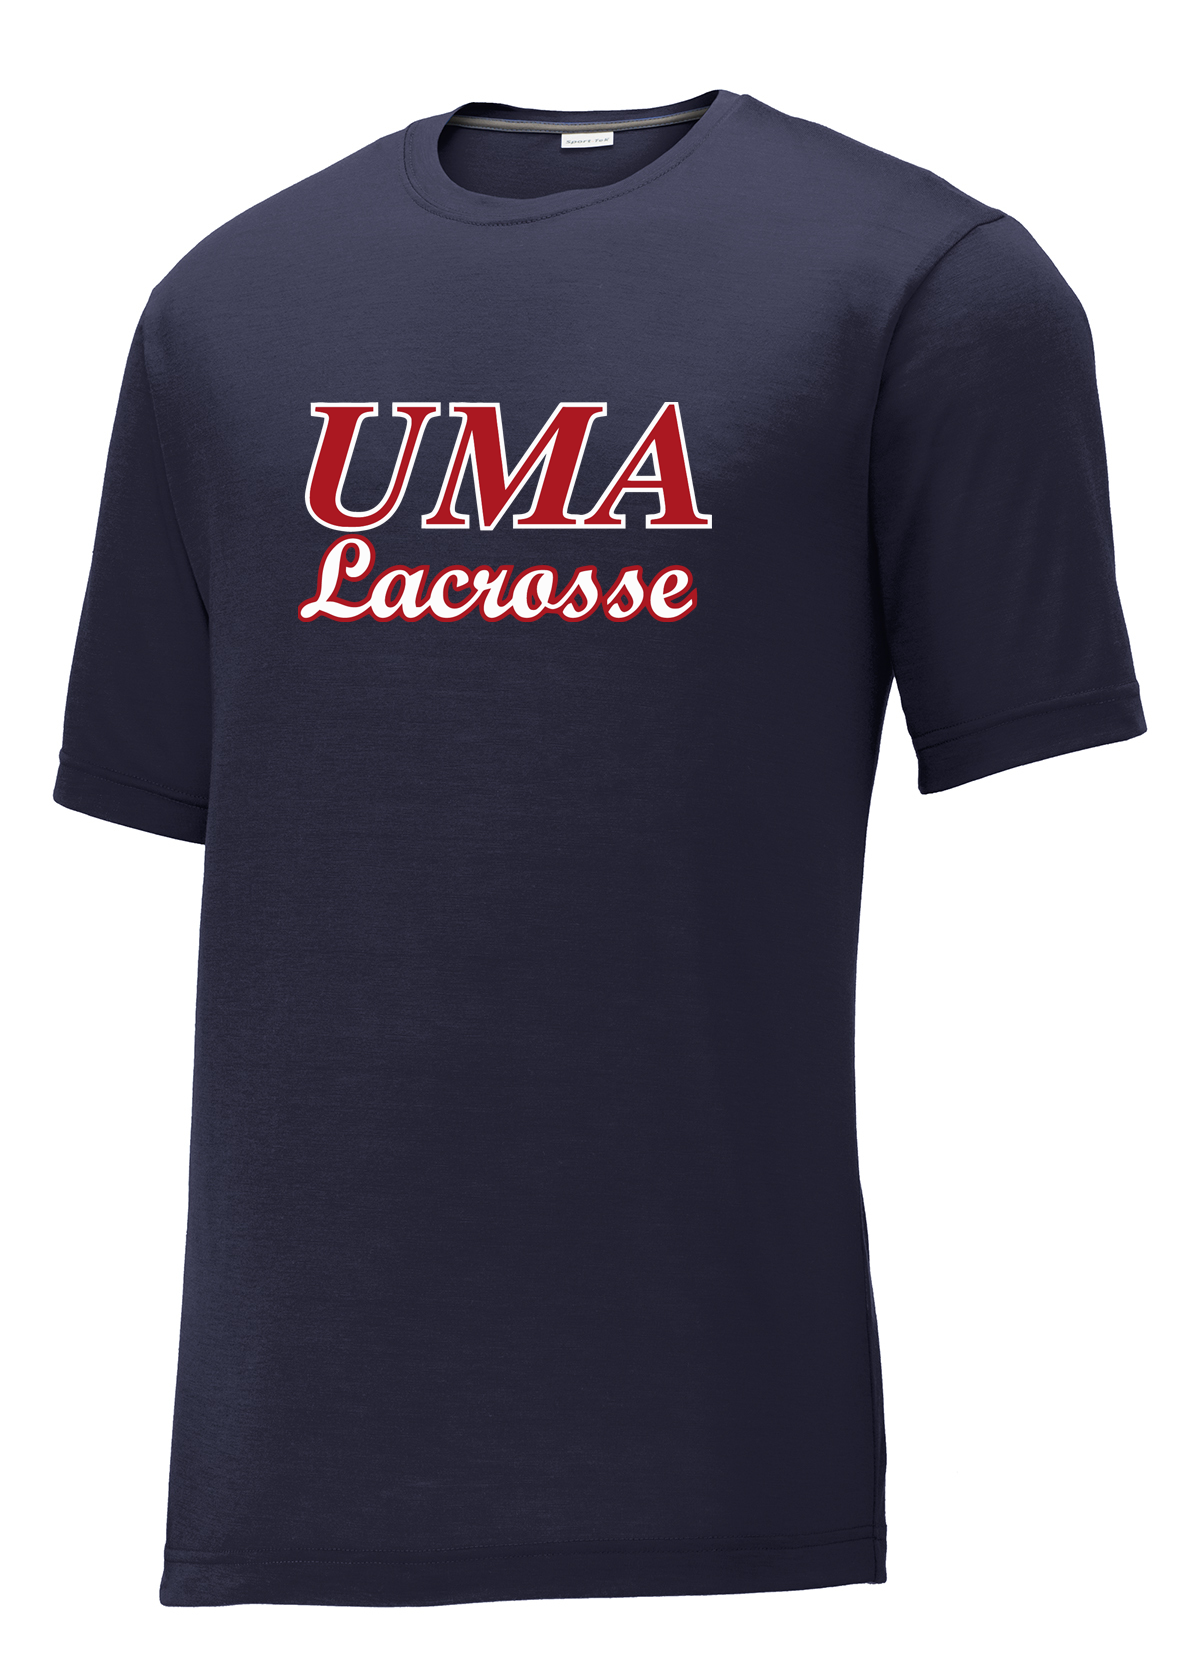 Utah Military Academy Lacrosse - Men's CottonTouch Performance T-Shirt